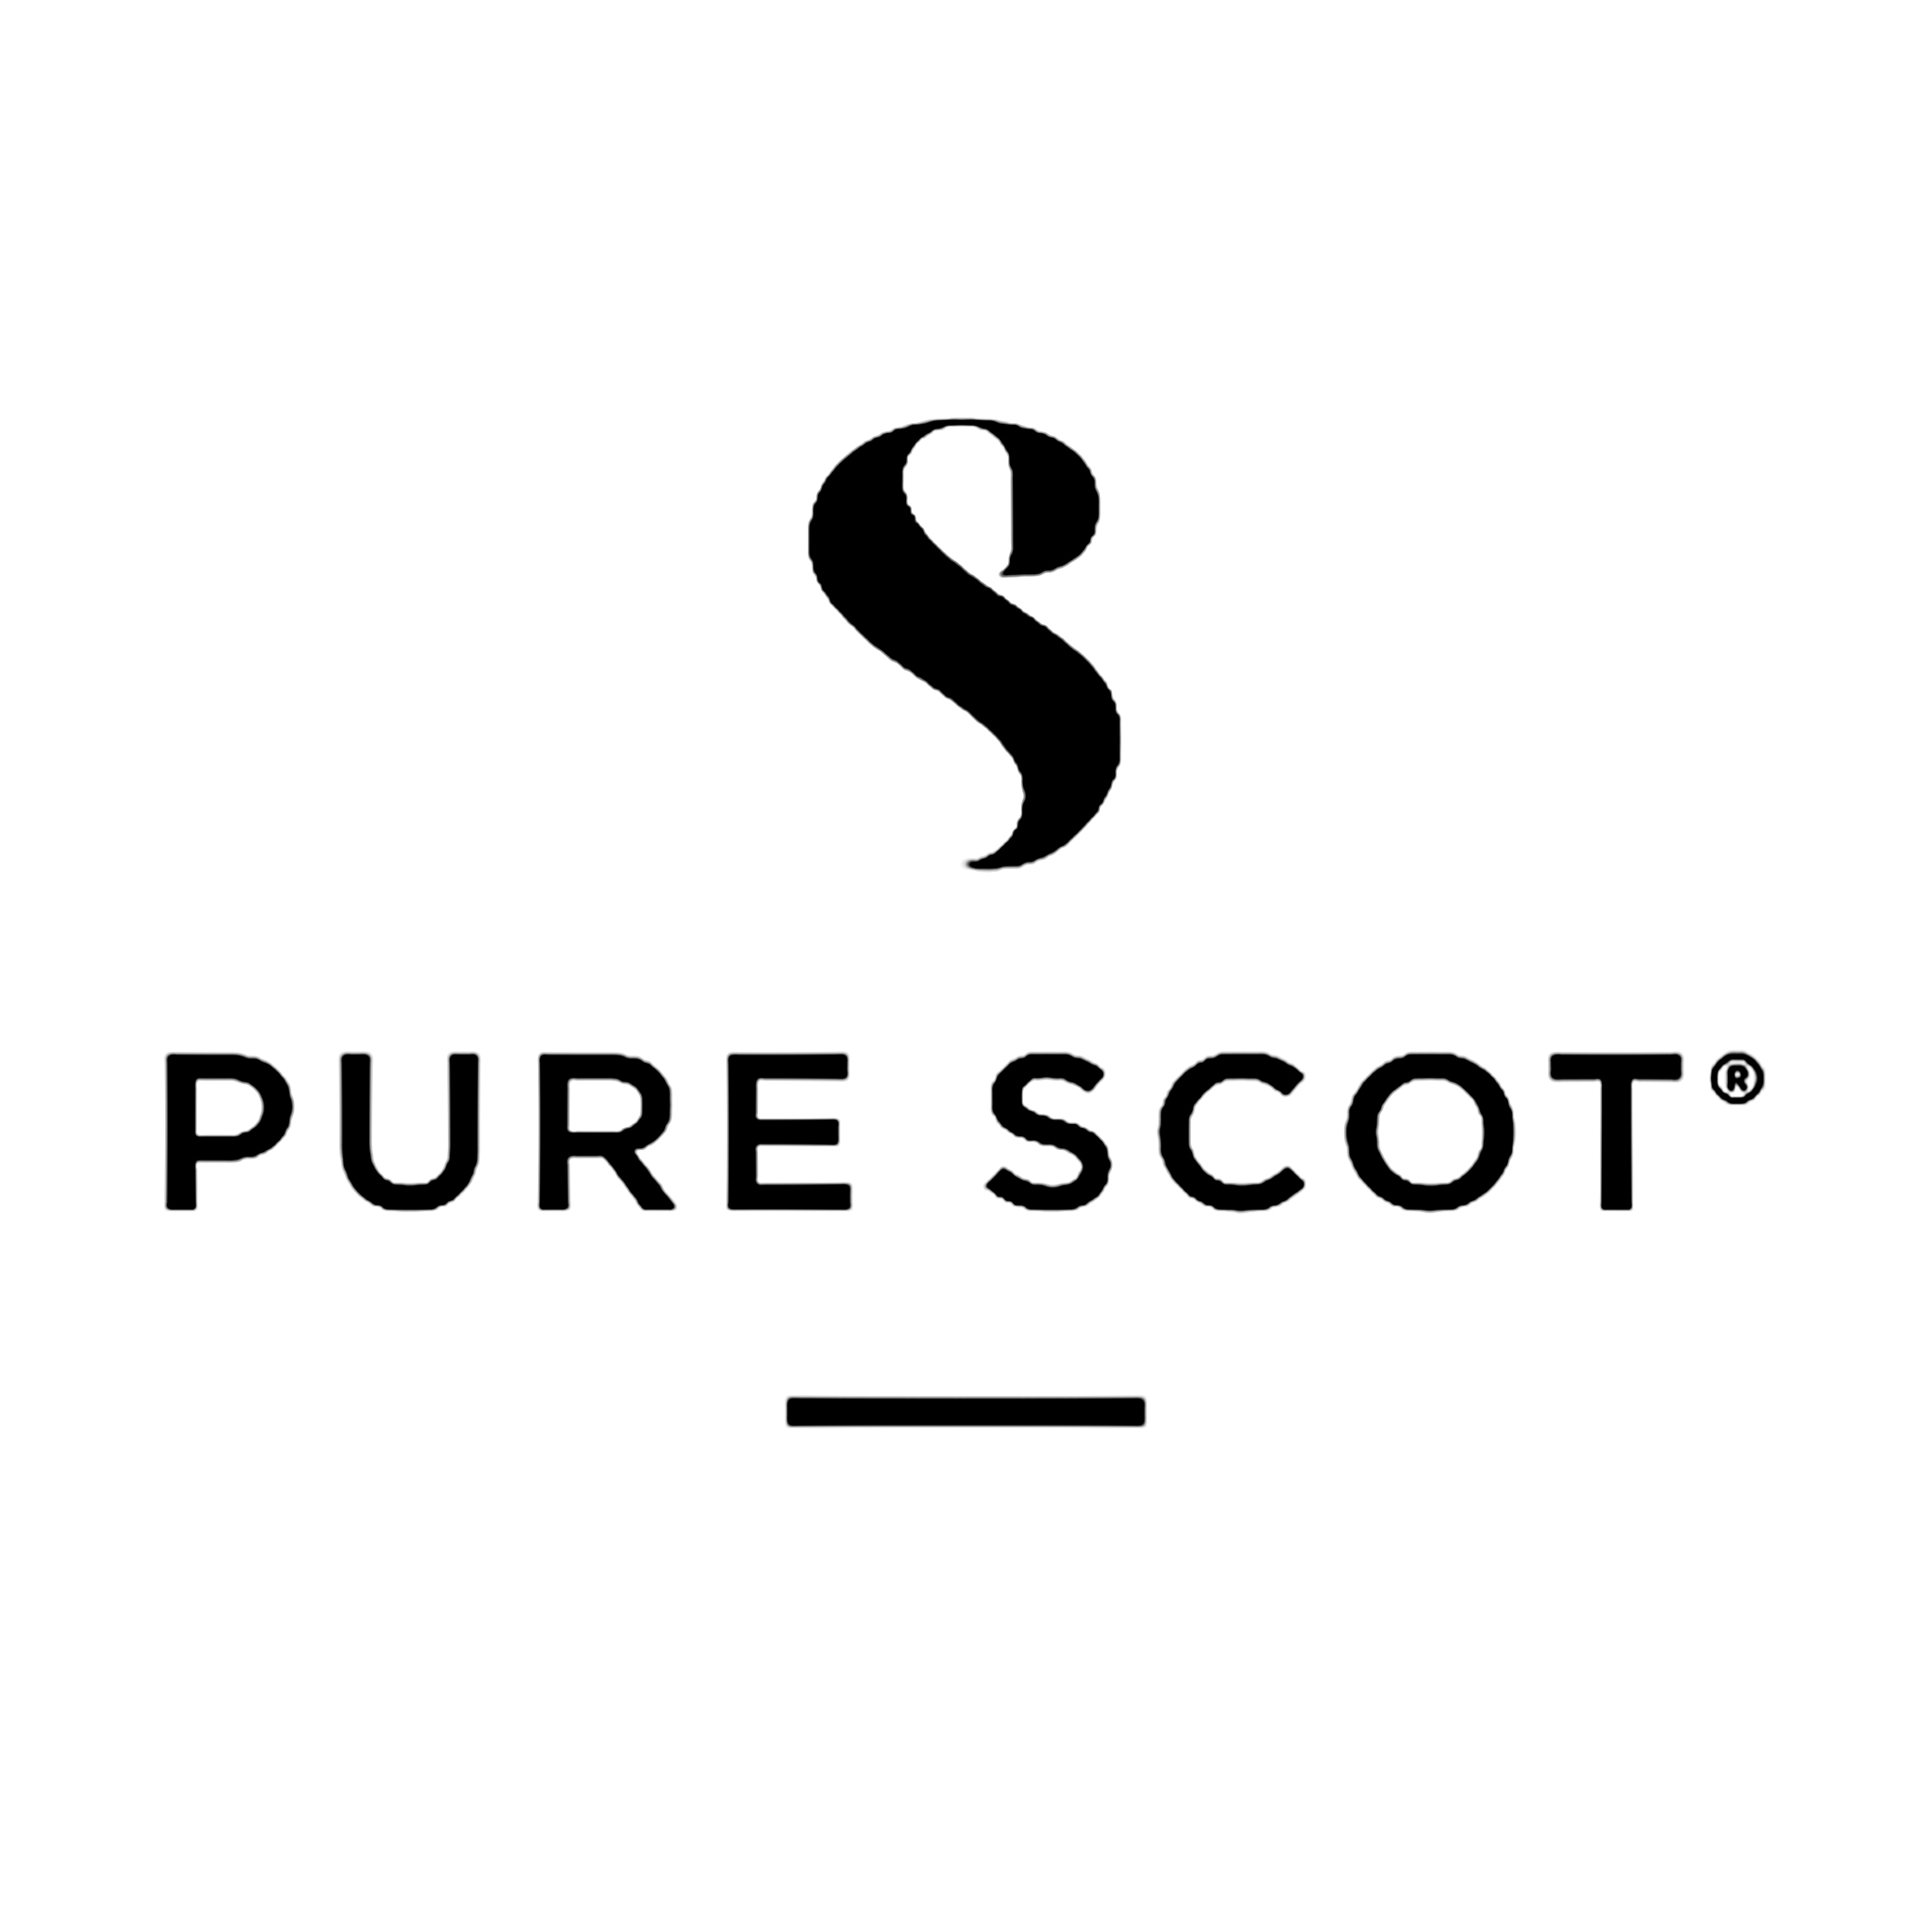 Pancaniaga Indoperkasa - Pure Scot